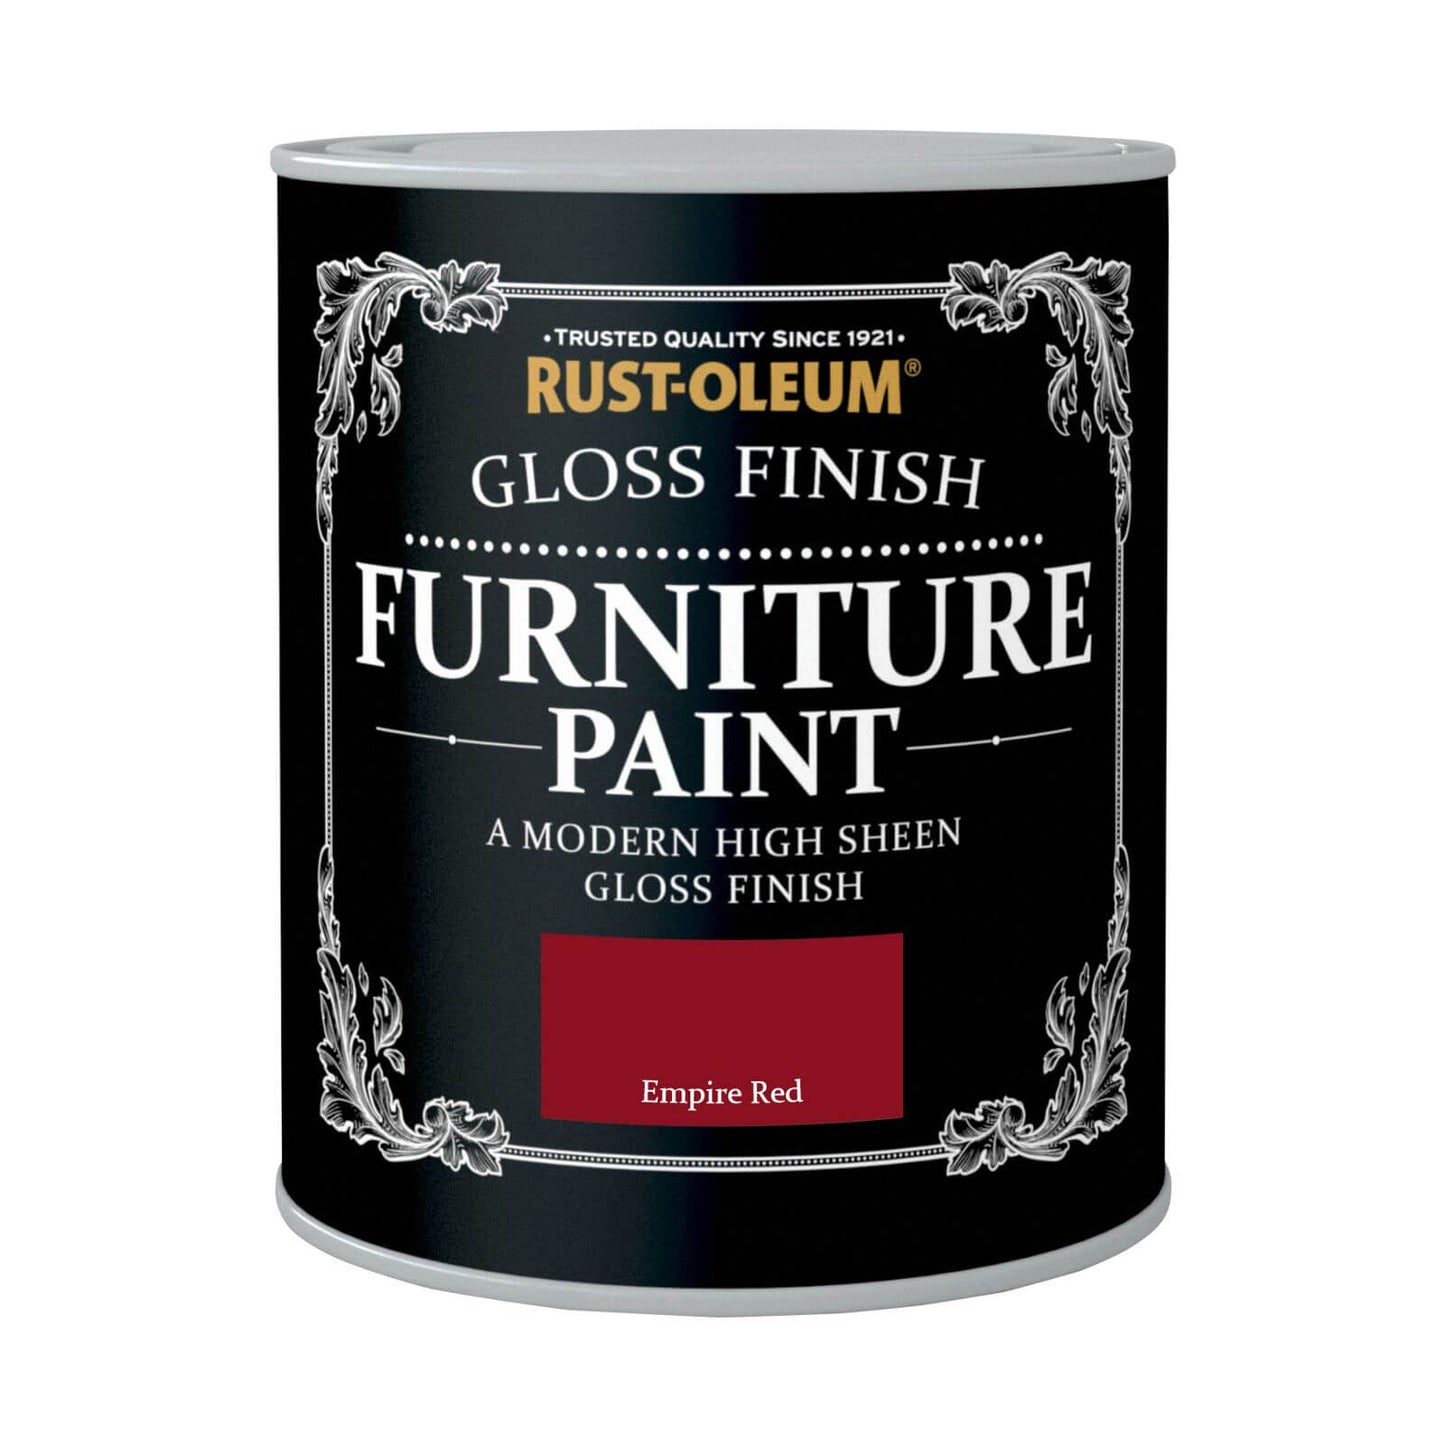 Rust-Oleum Gloss Finish Furniture Paint Empire Red